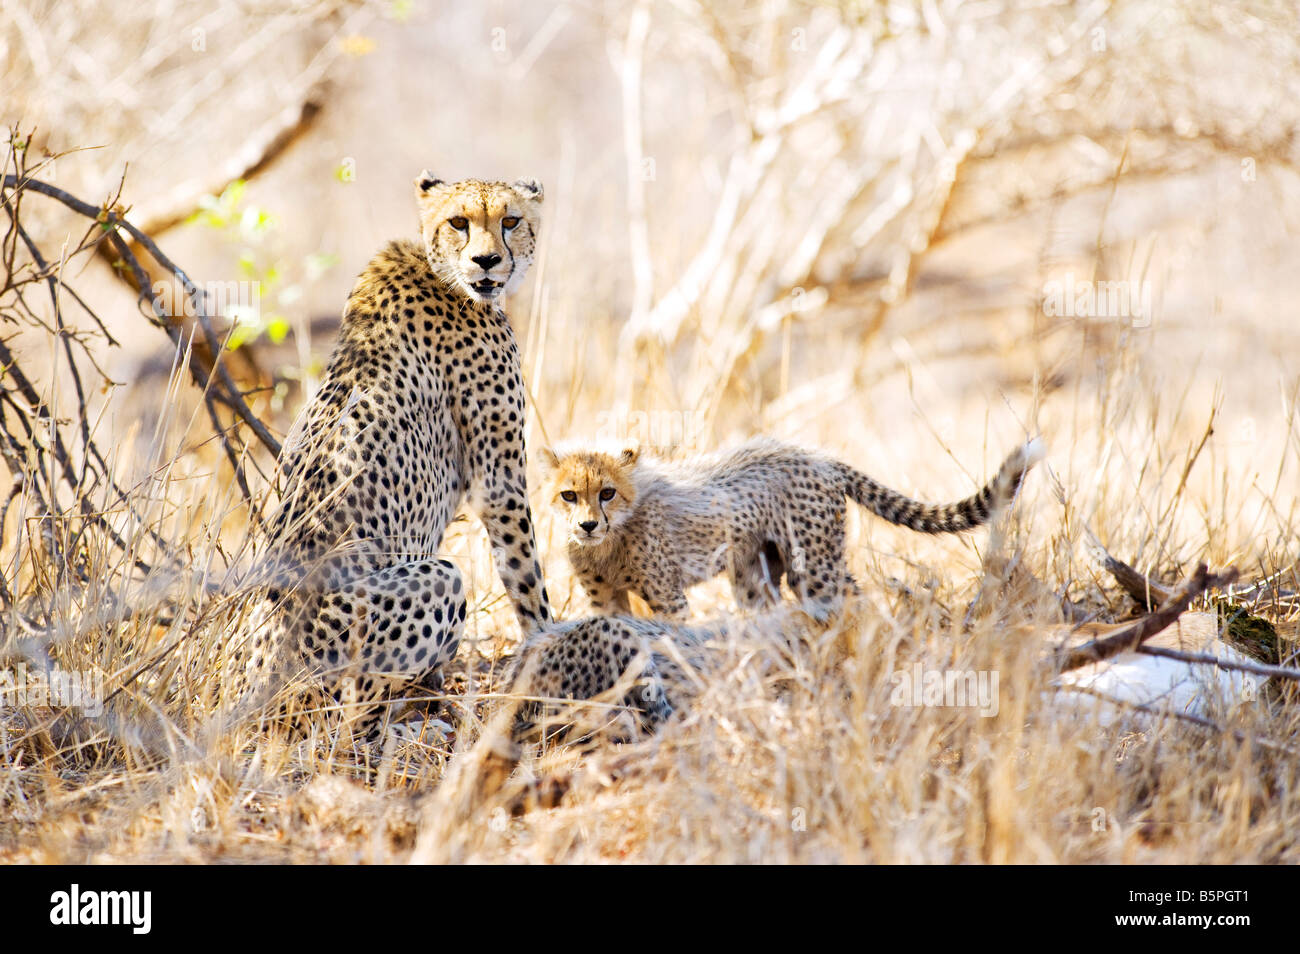 WILDLIFE wild cheetah gepard mother with cub Acinonyx jubatus caught an impala take prey southafrica south-afrika wilderness Stock Photo